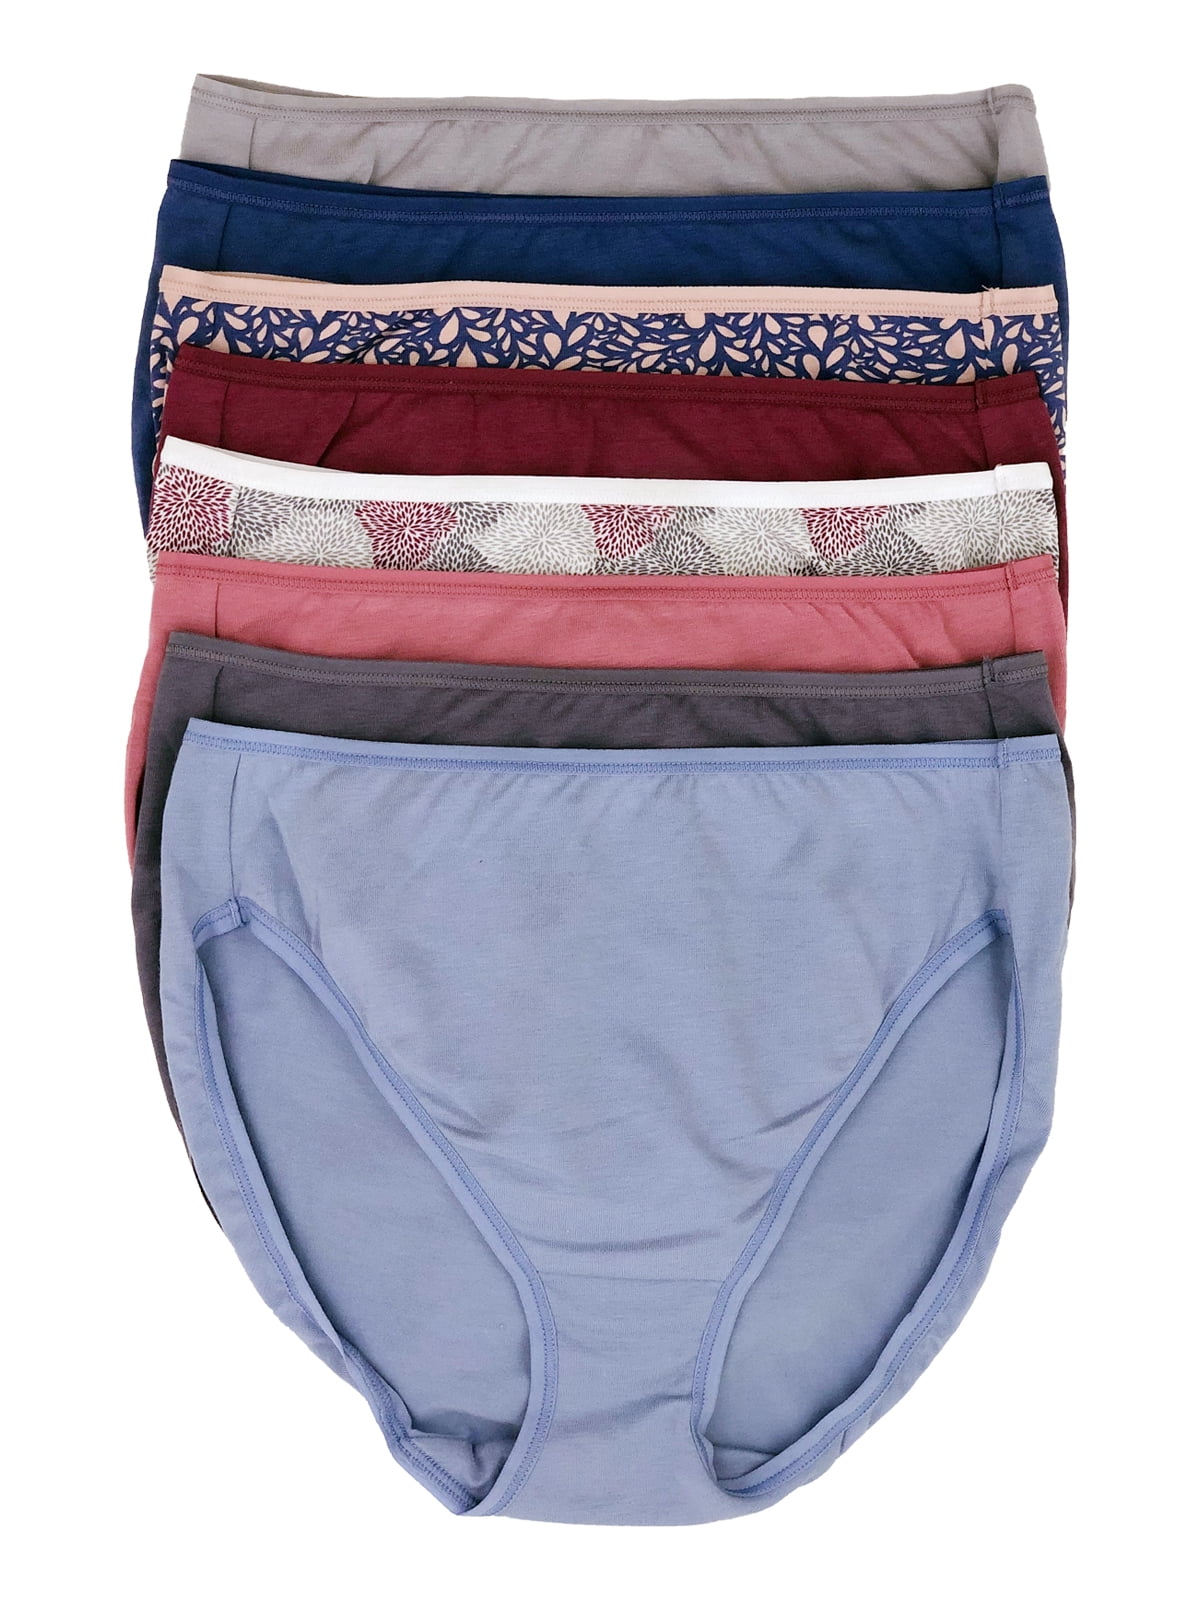 Felina Cotton Modal Hi Cut Panties - Sexy Lingerie Panties for Women -  Underwear for Women 8-Pack (Nautical Blue, X-Large) 